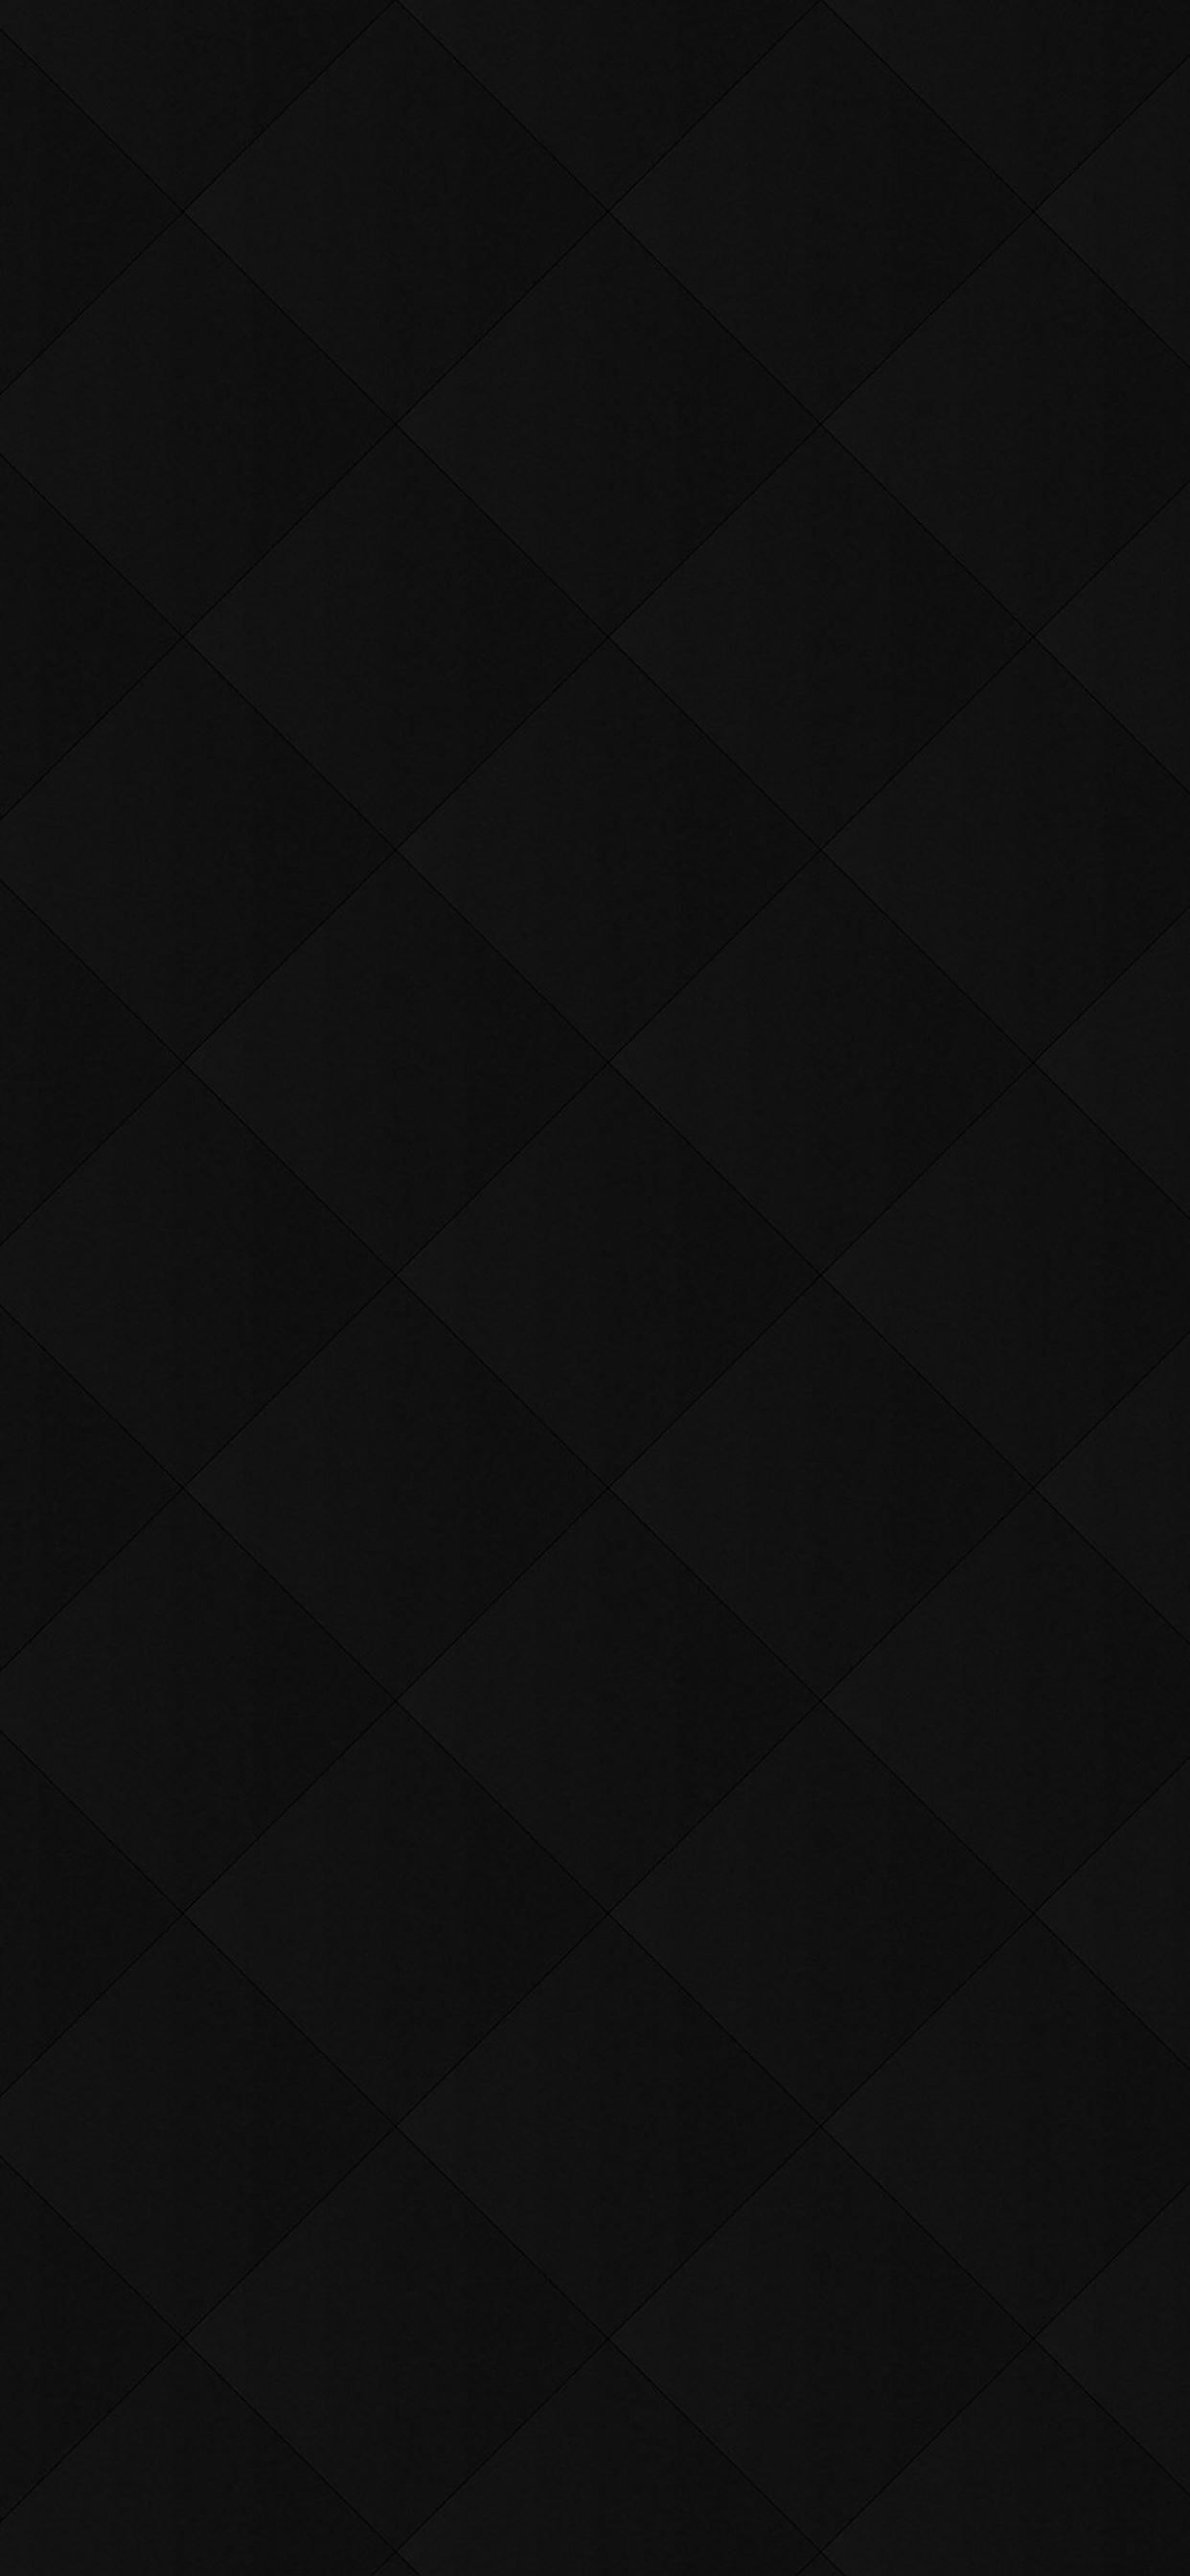 Gradient squares dark pattern iPhone X .ilikewallpaper.net